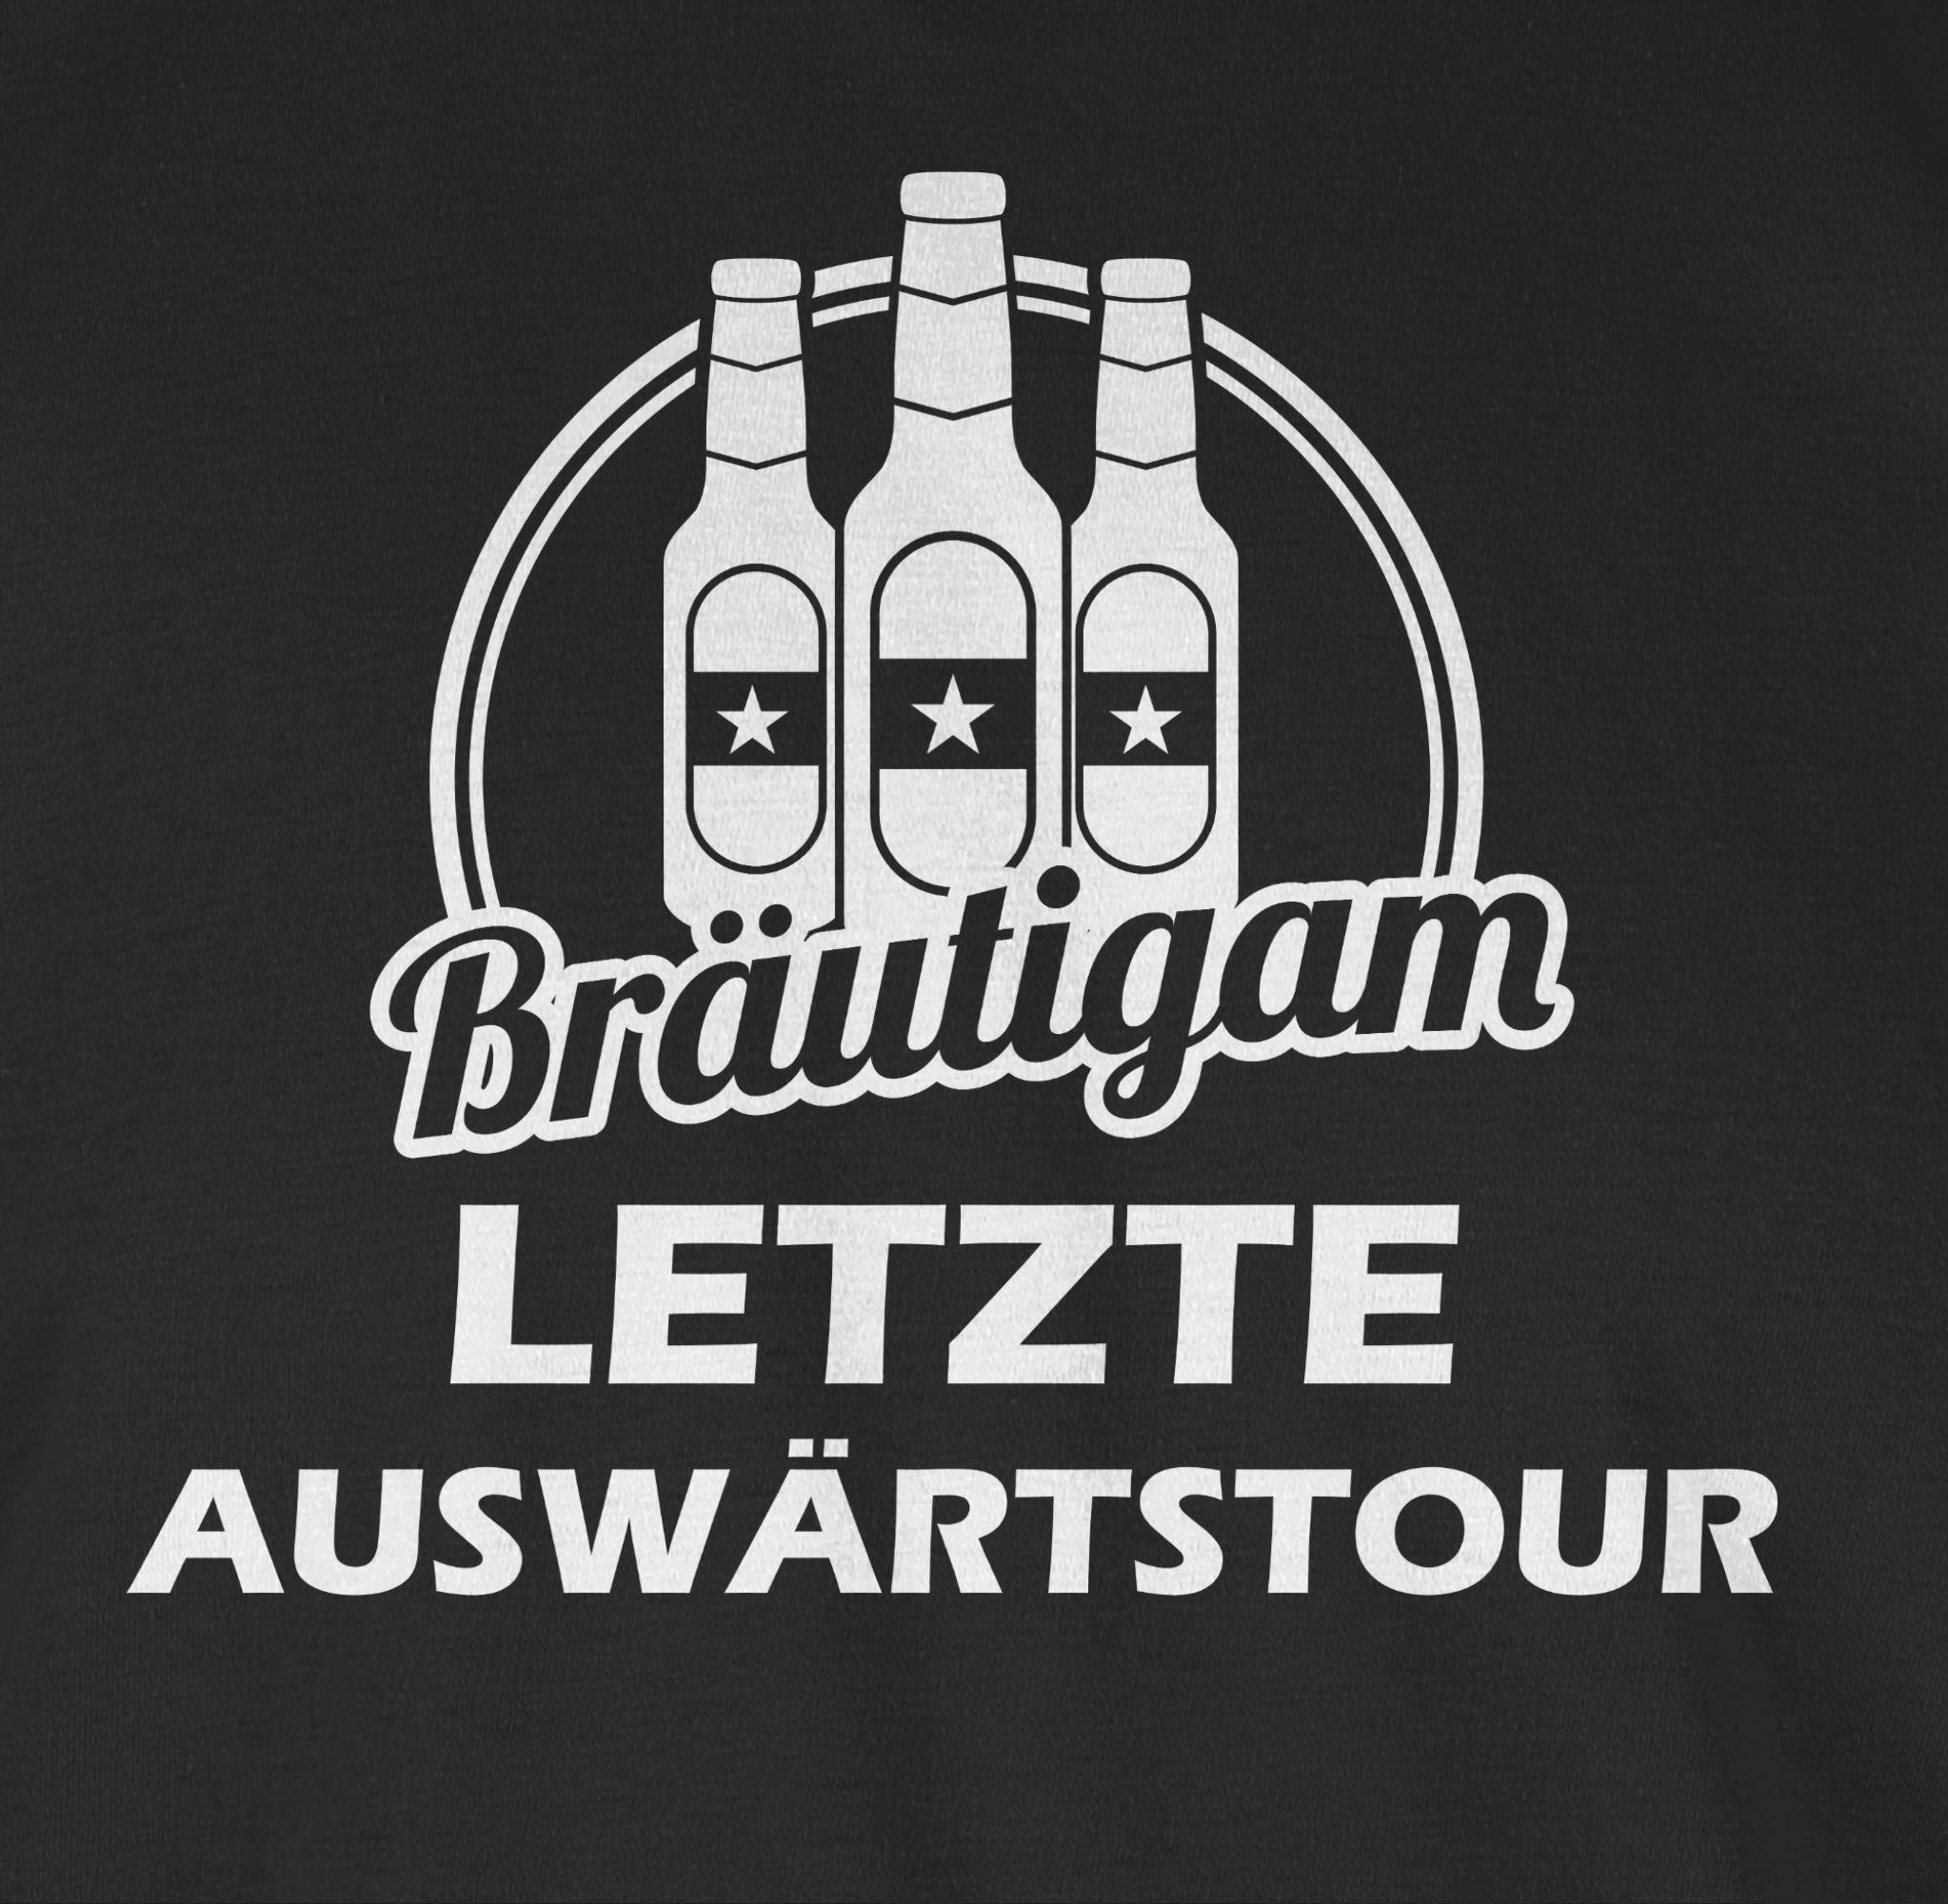 Shirtracer T-Shirt Letzte Auswärtstour Bräutigam Schwarz 1 Männer Bier JGA